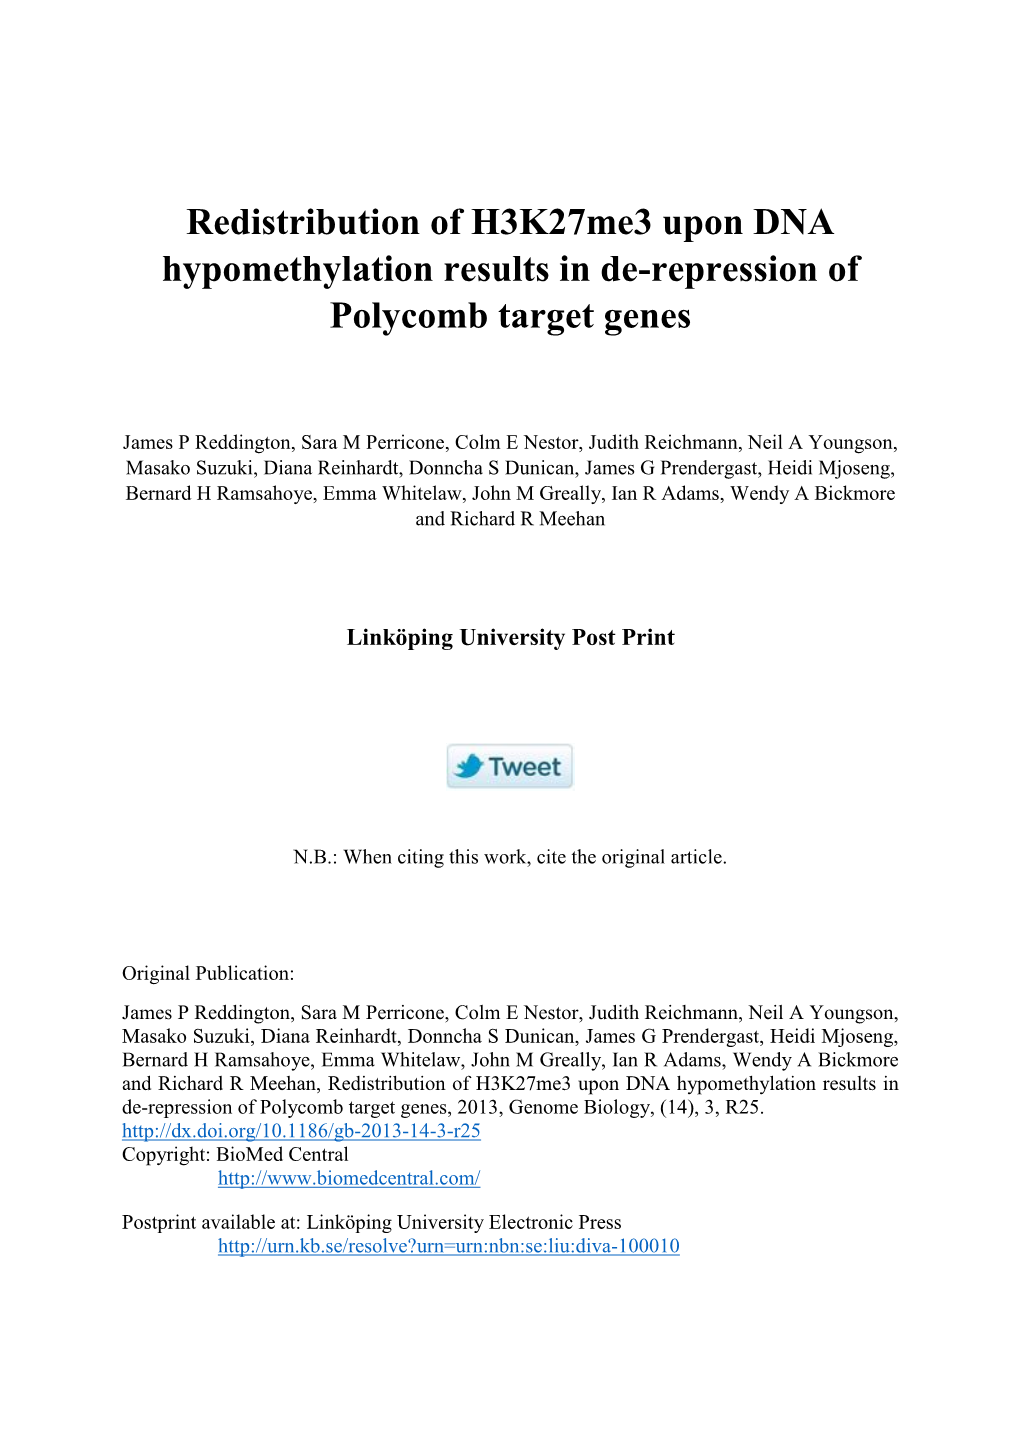 Redistribution of H3k27me3 Upon DNA Hypomethylation Results in De-Repression of Polycomb Target Genes